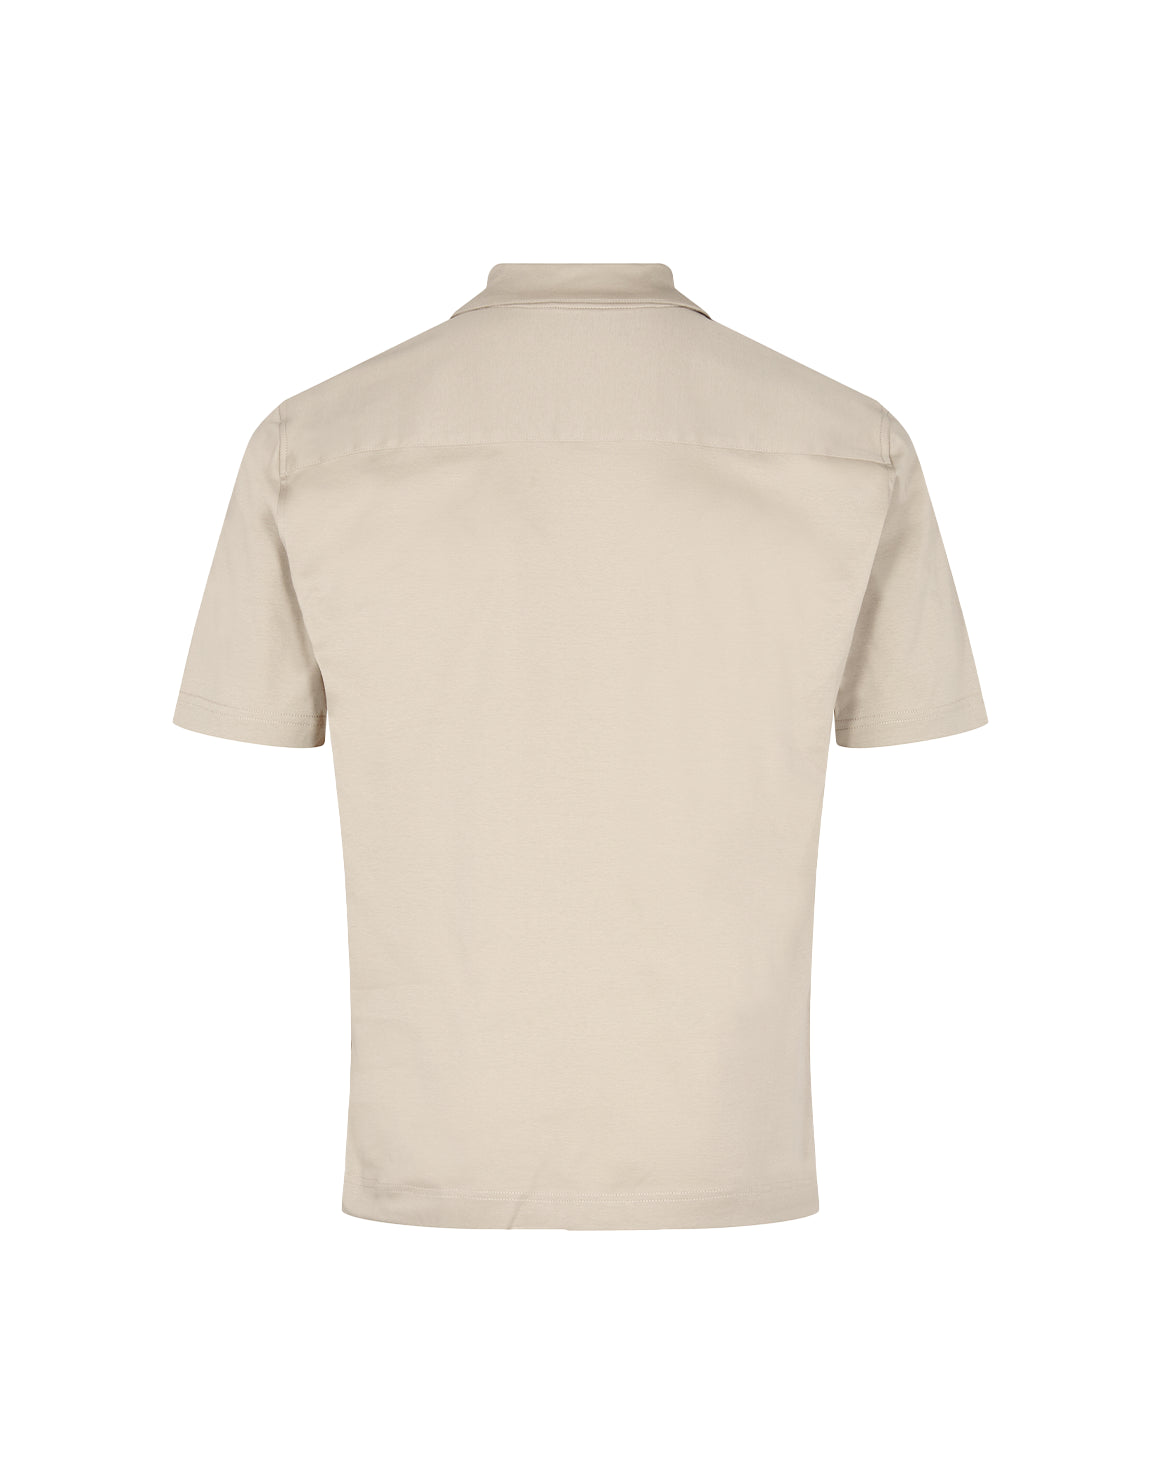 Marco Cuban SS Shirt - Cold Kit - Mos Mosh Gallery - Kul og Koks